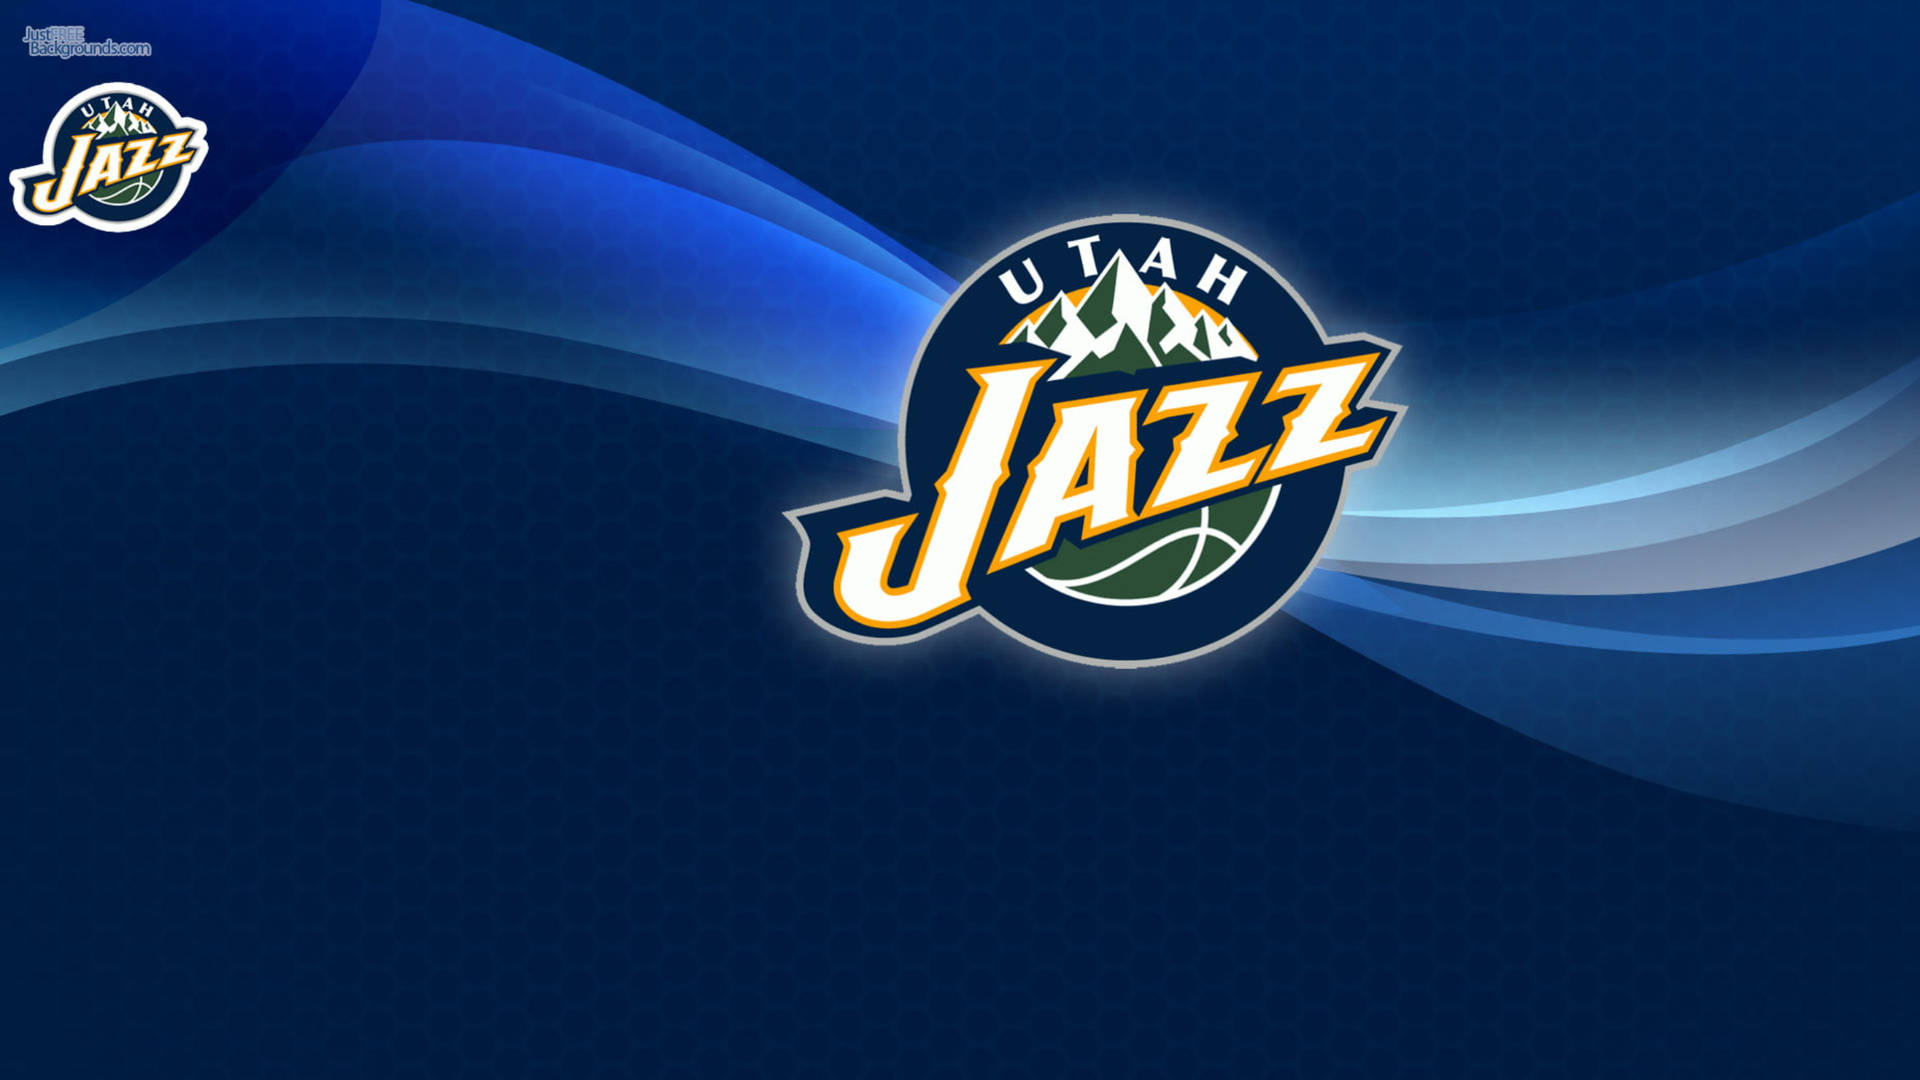 Utah Jazz In Blue Mesh Texture Background